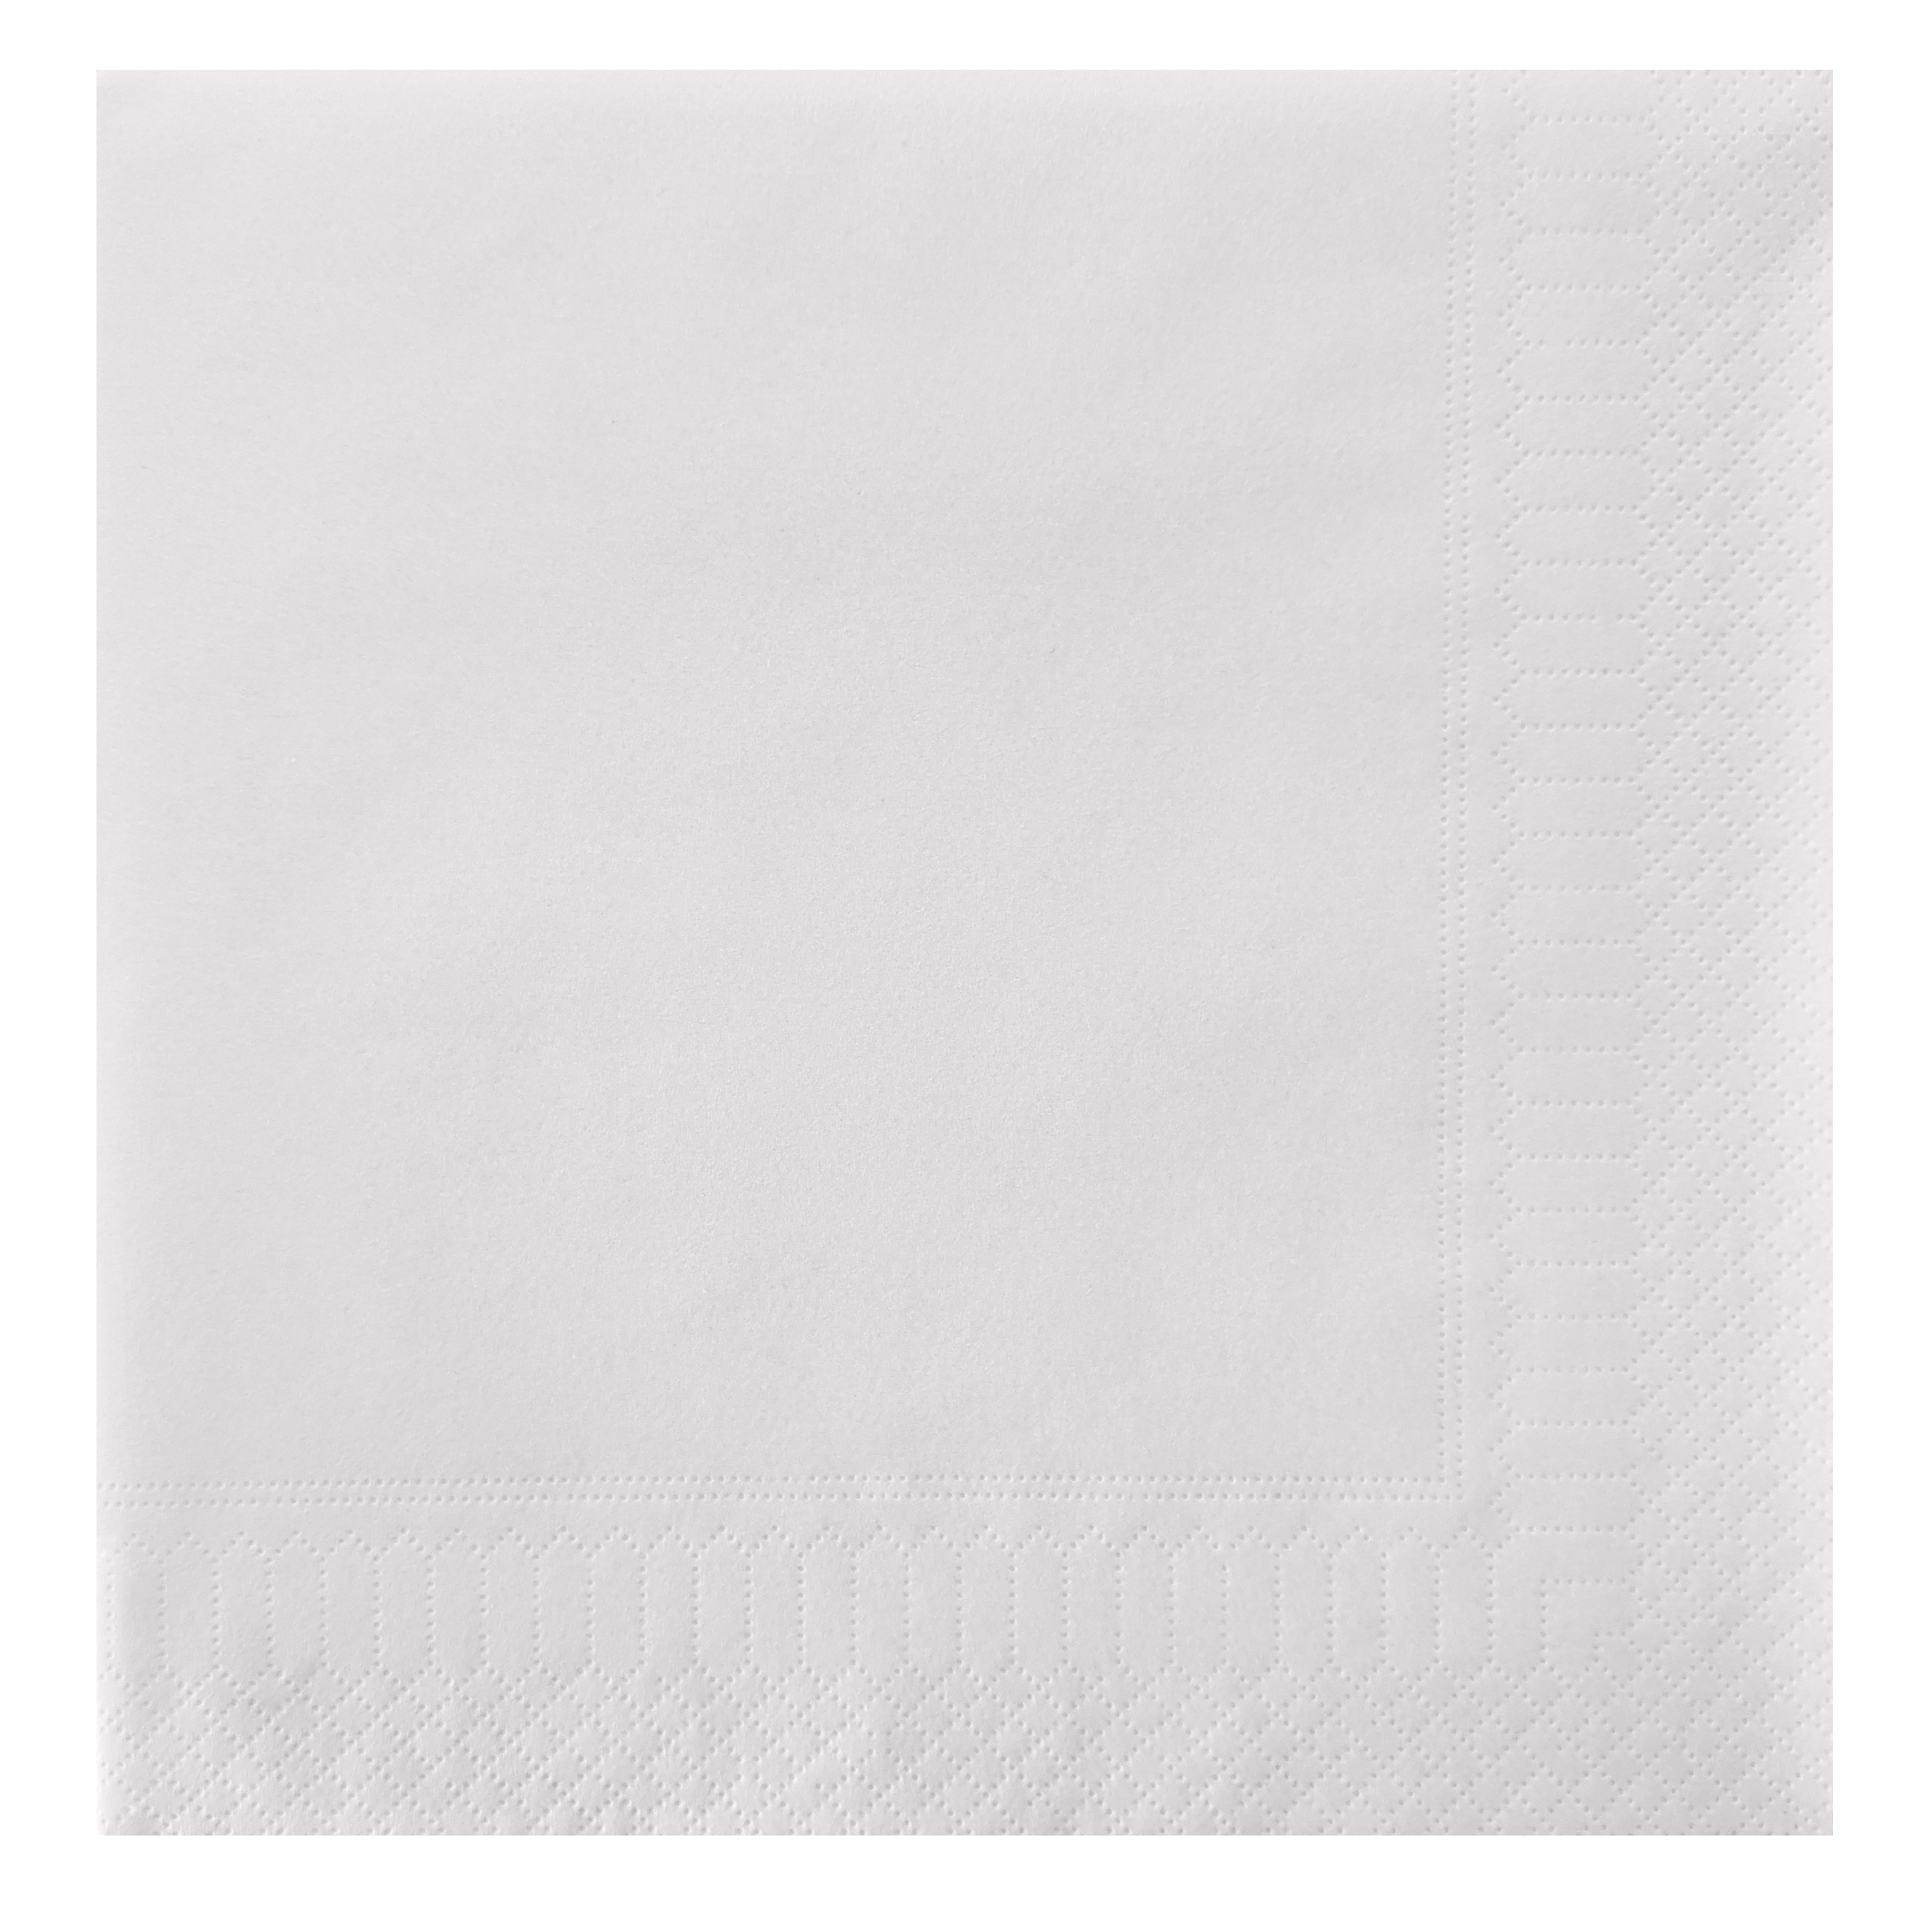 55491 Servet wit 2-laags 40 cm 100 stuks